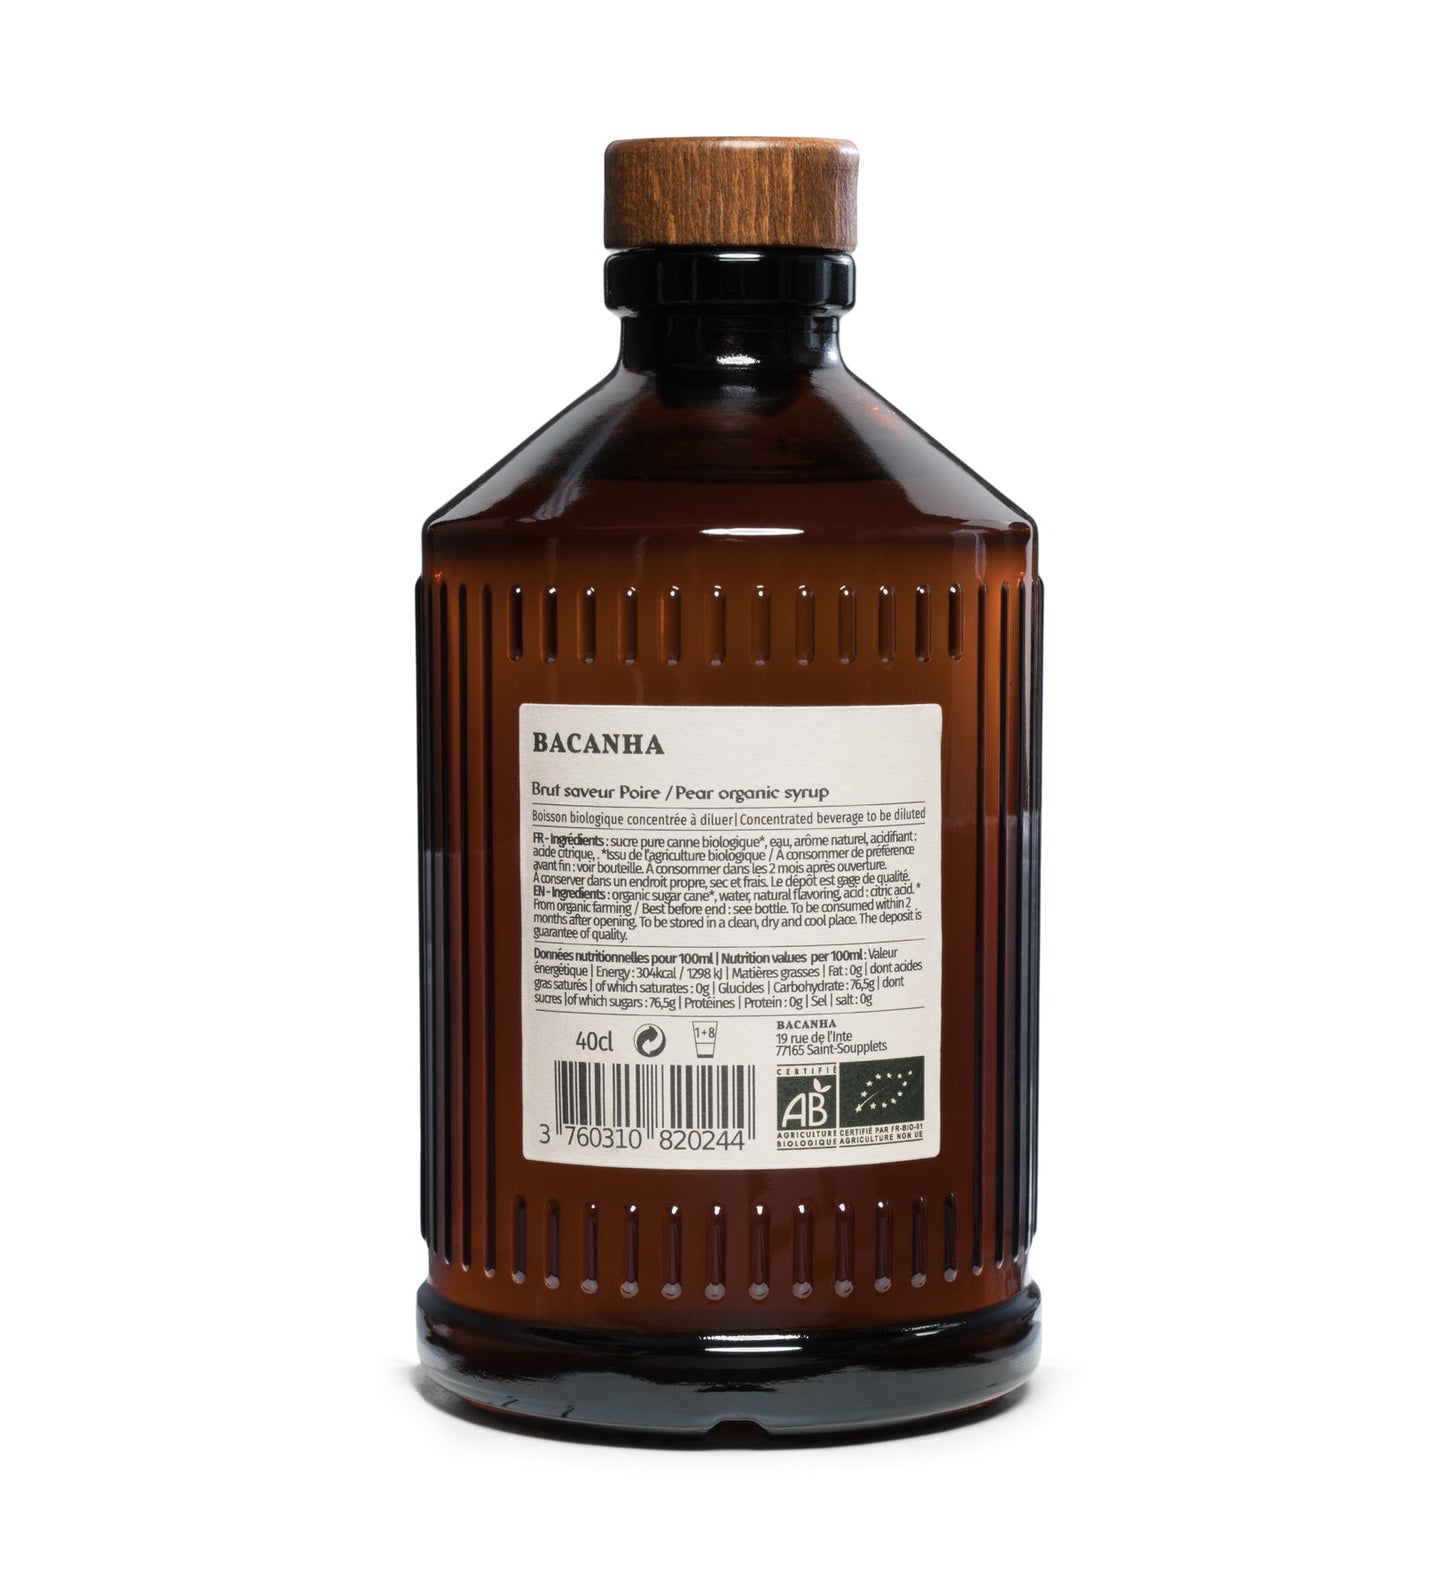 Bacanha Pear flavored syrup [ORGANIC]